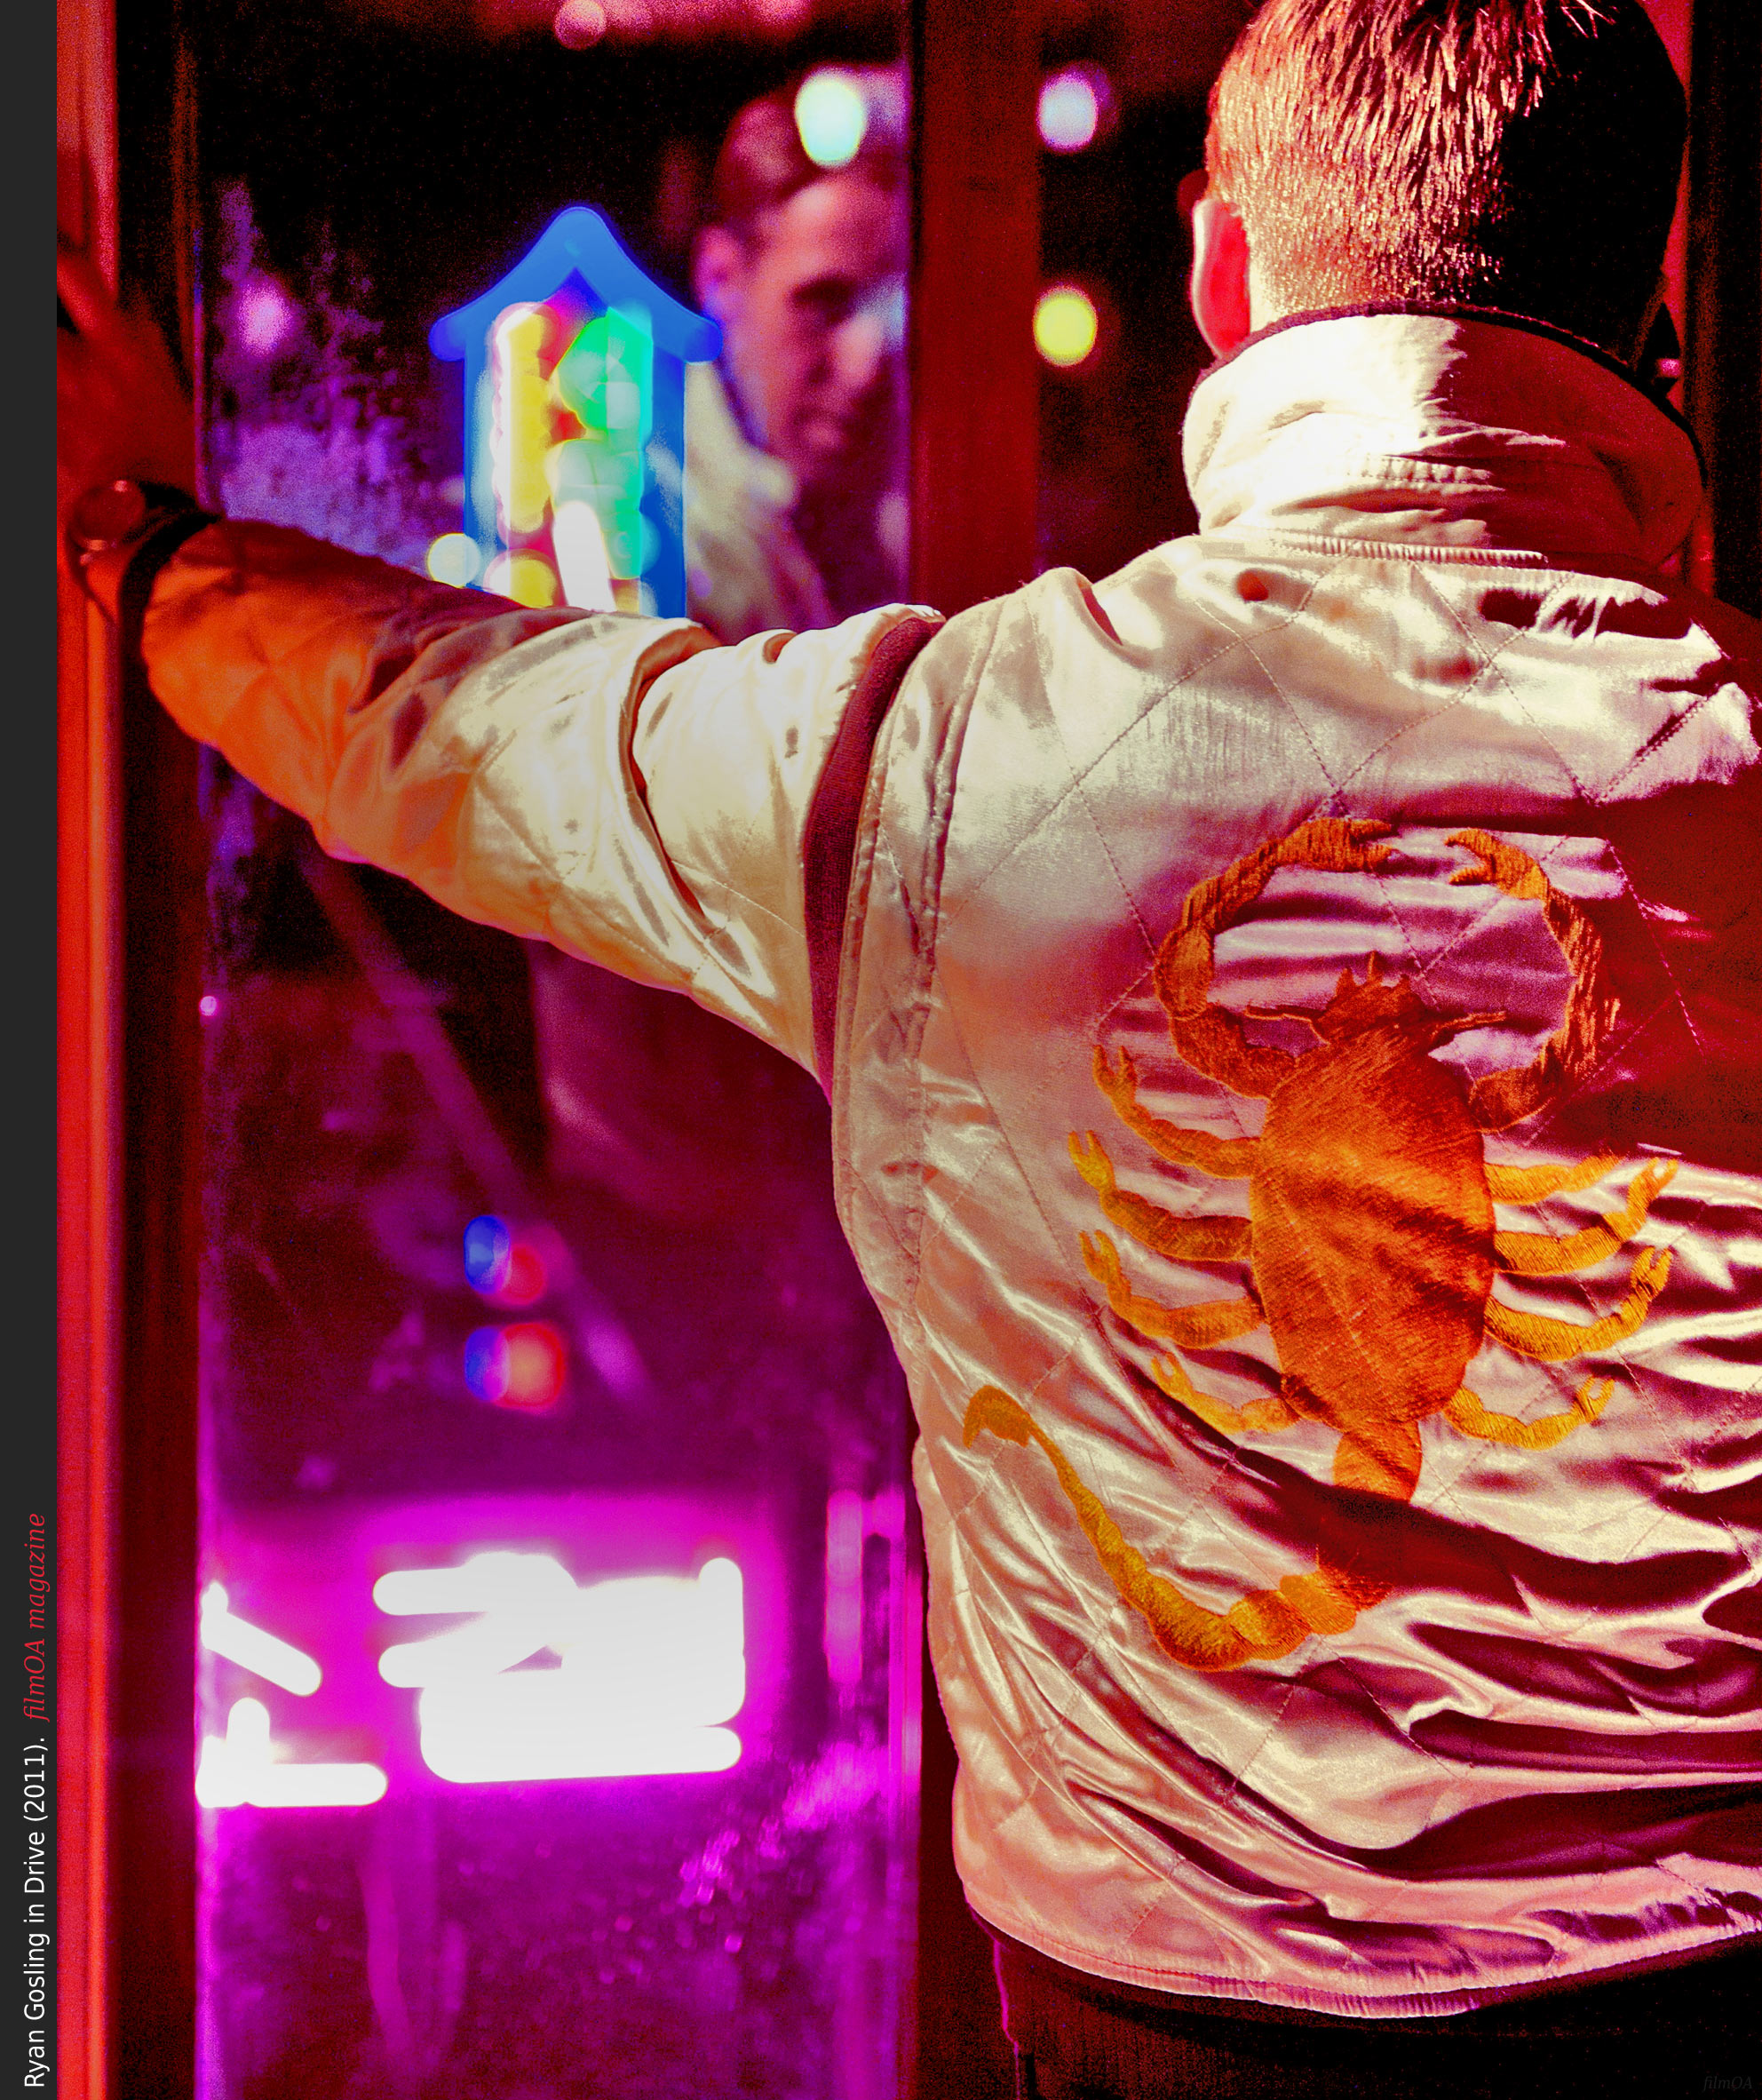 Ryan Gosling Scorpion Jacket in Drive poster 2011